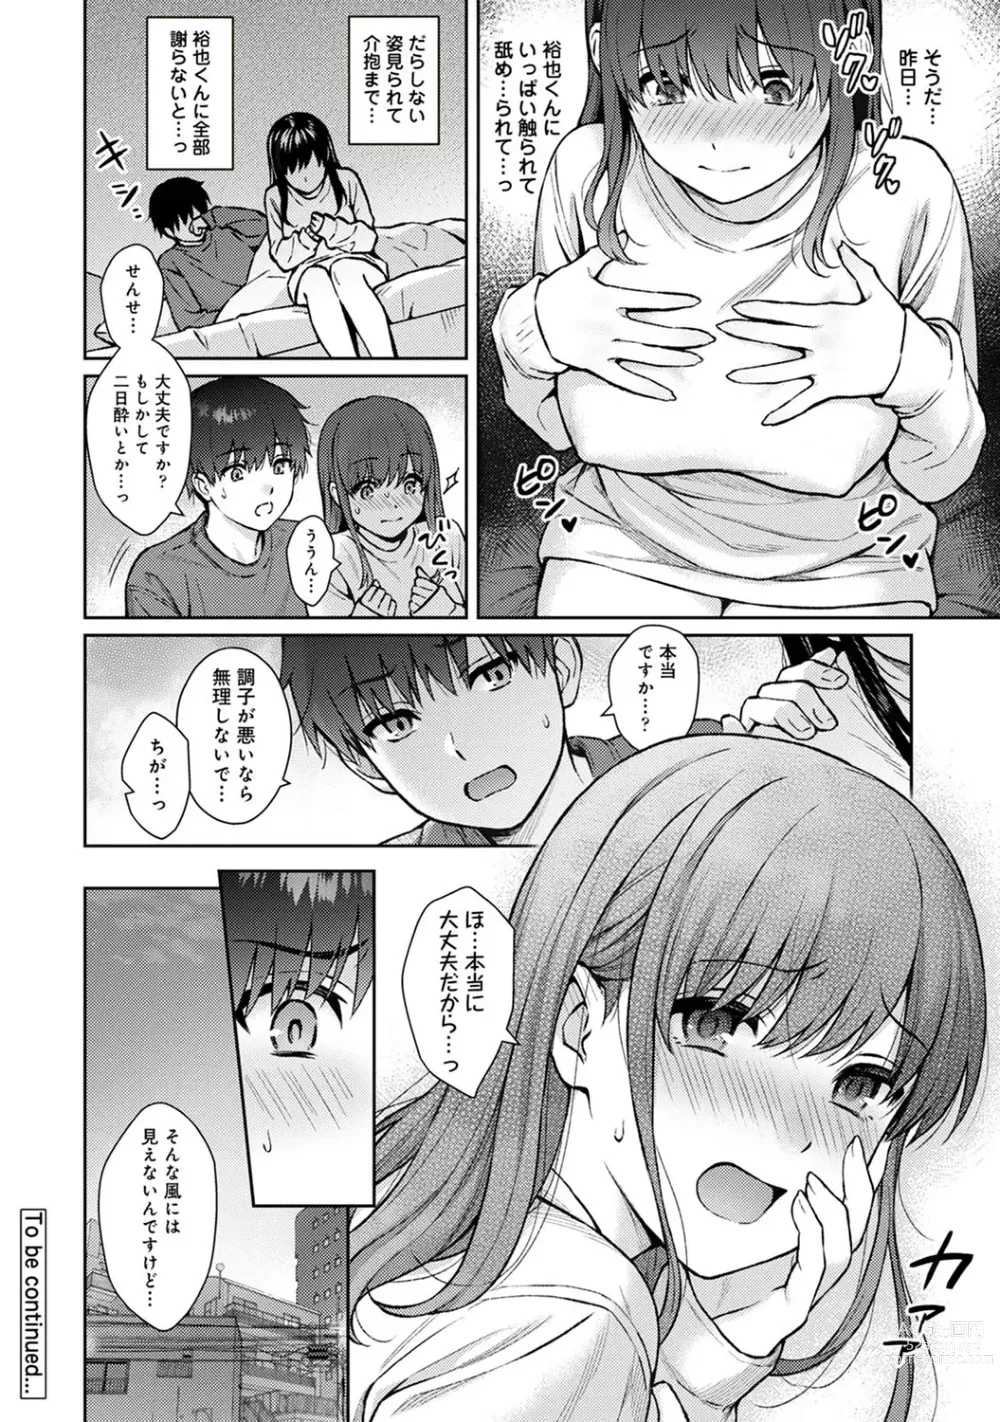 Page 386 of manga Sensei to Boku Ch. 1-14